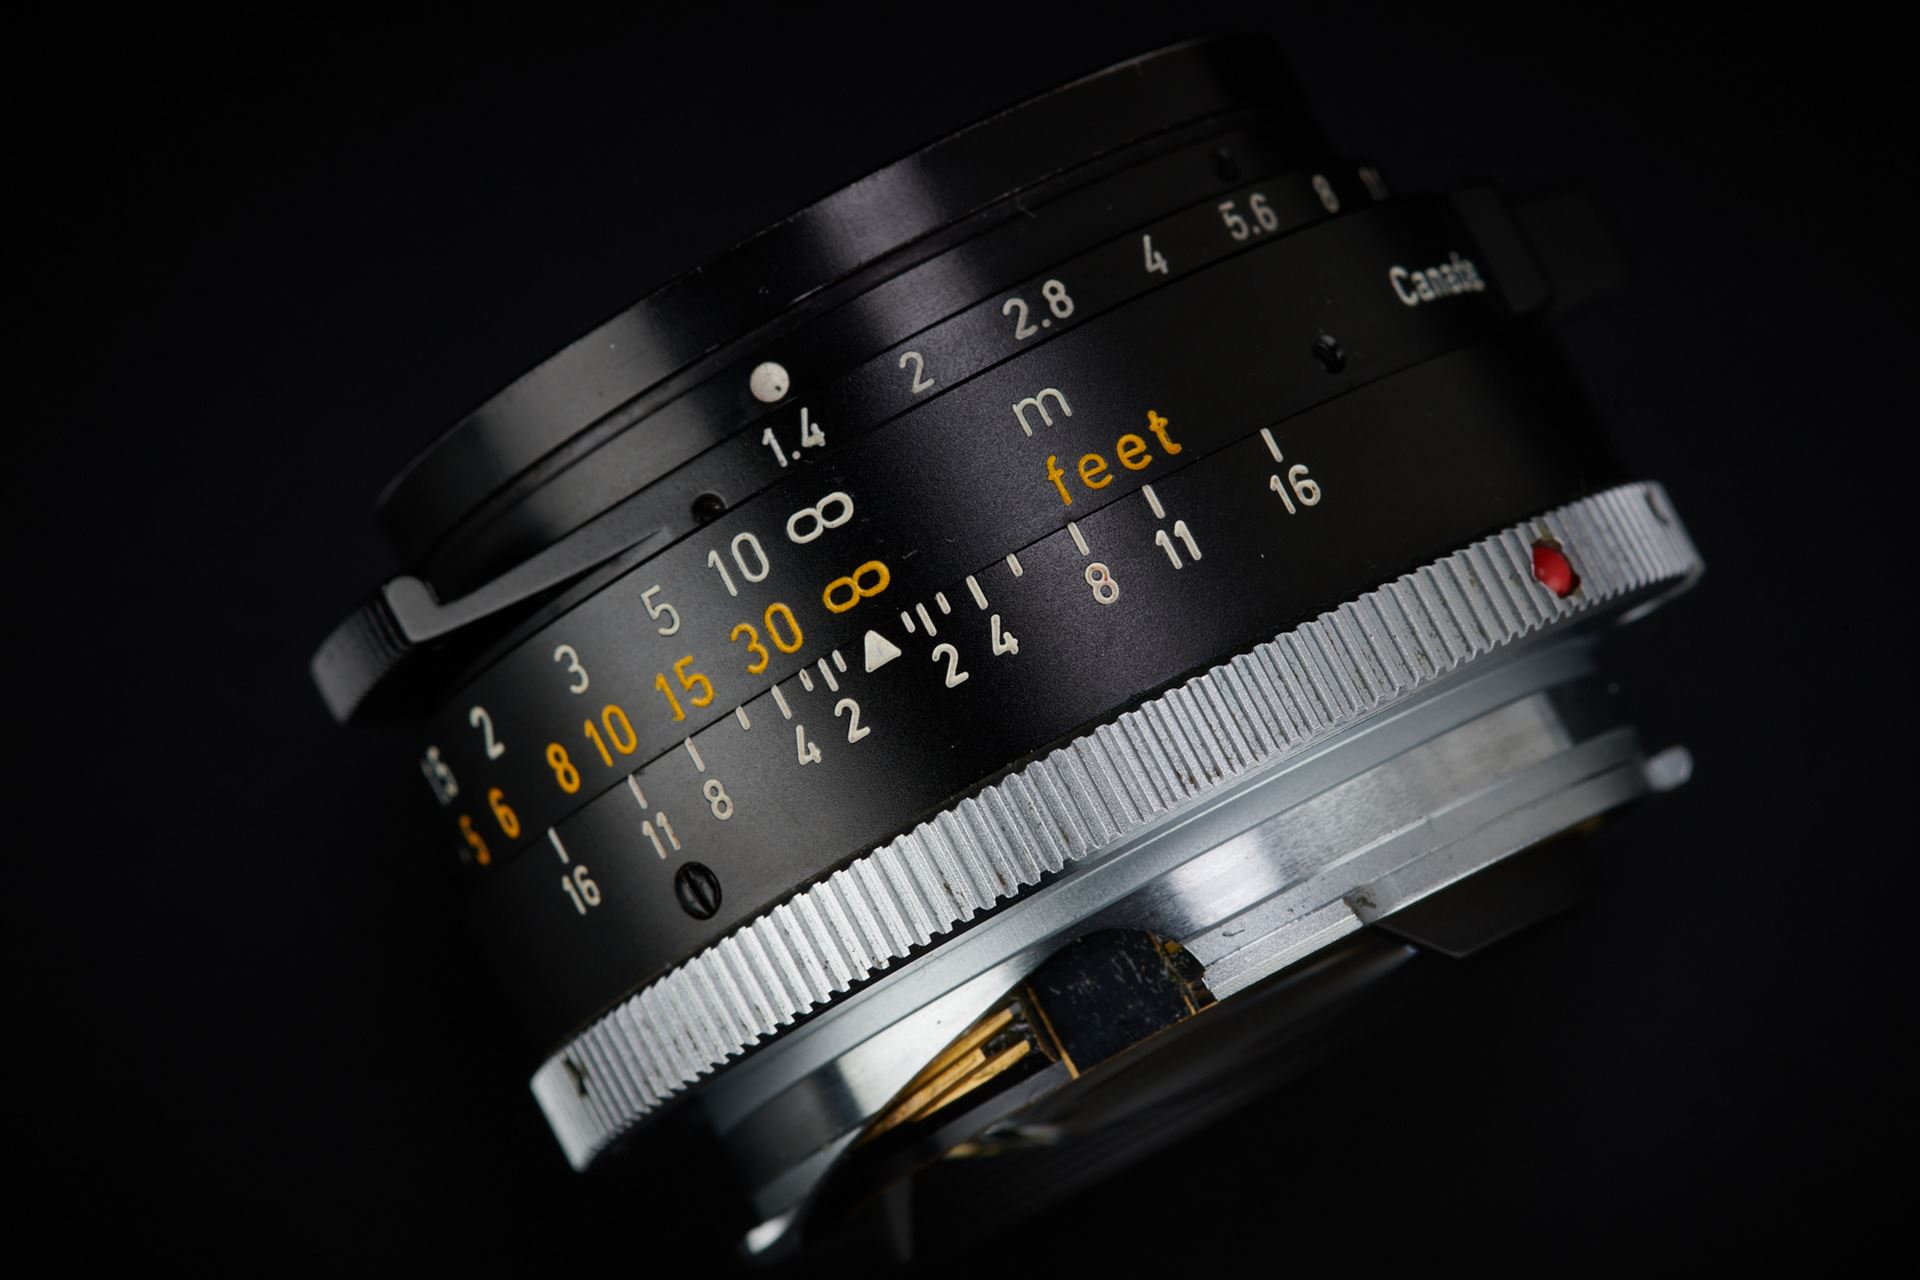 Picture of Leica Summilux-M 35mm f/1.4 Pre-ASPH. Canada